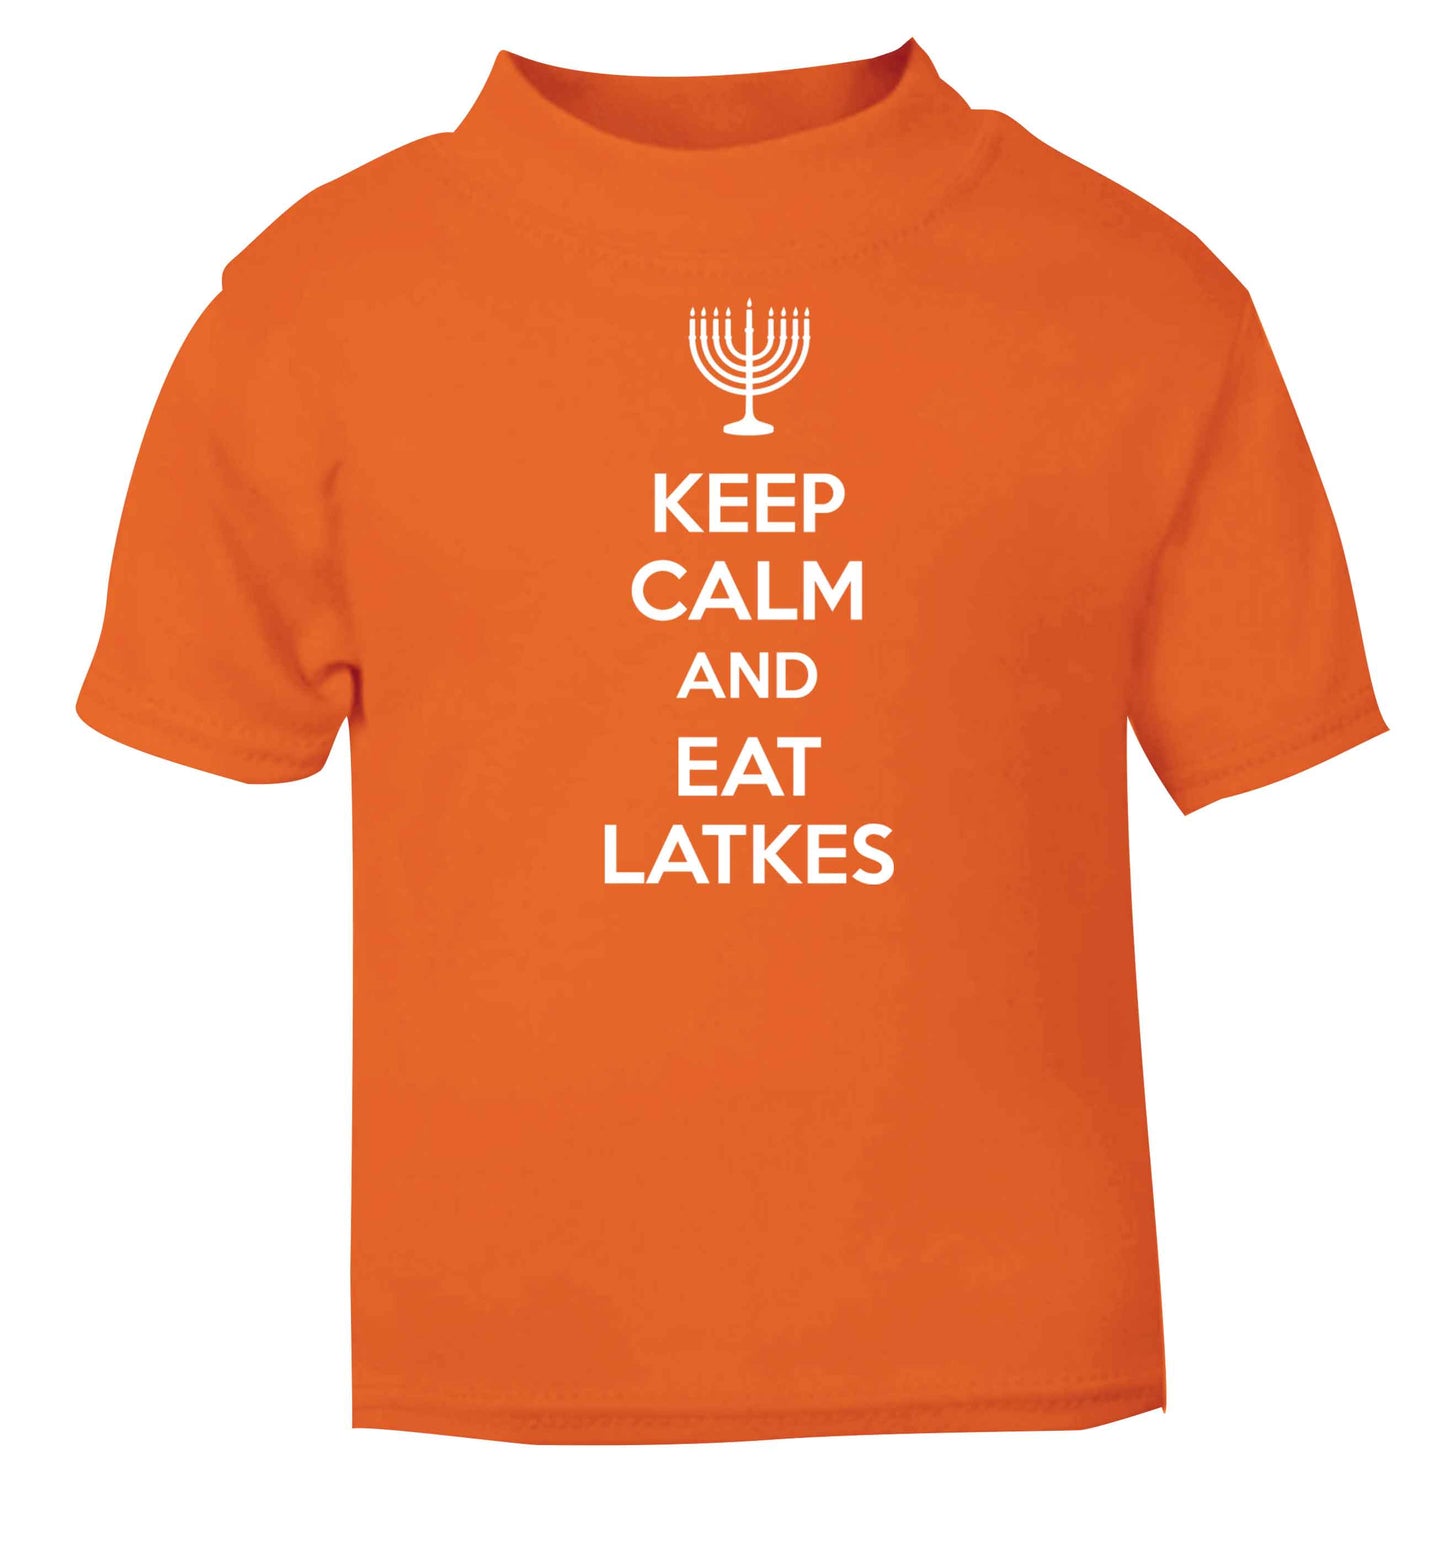 Keep calm and eat latkes orange baby toddler Tshirt 2 Years